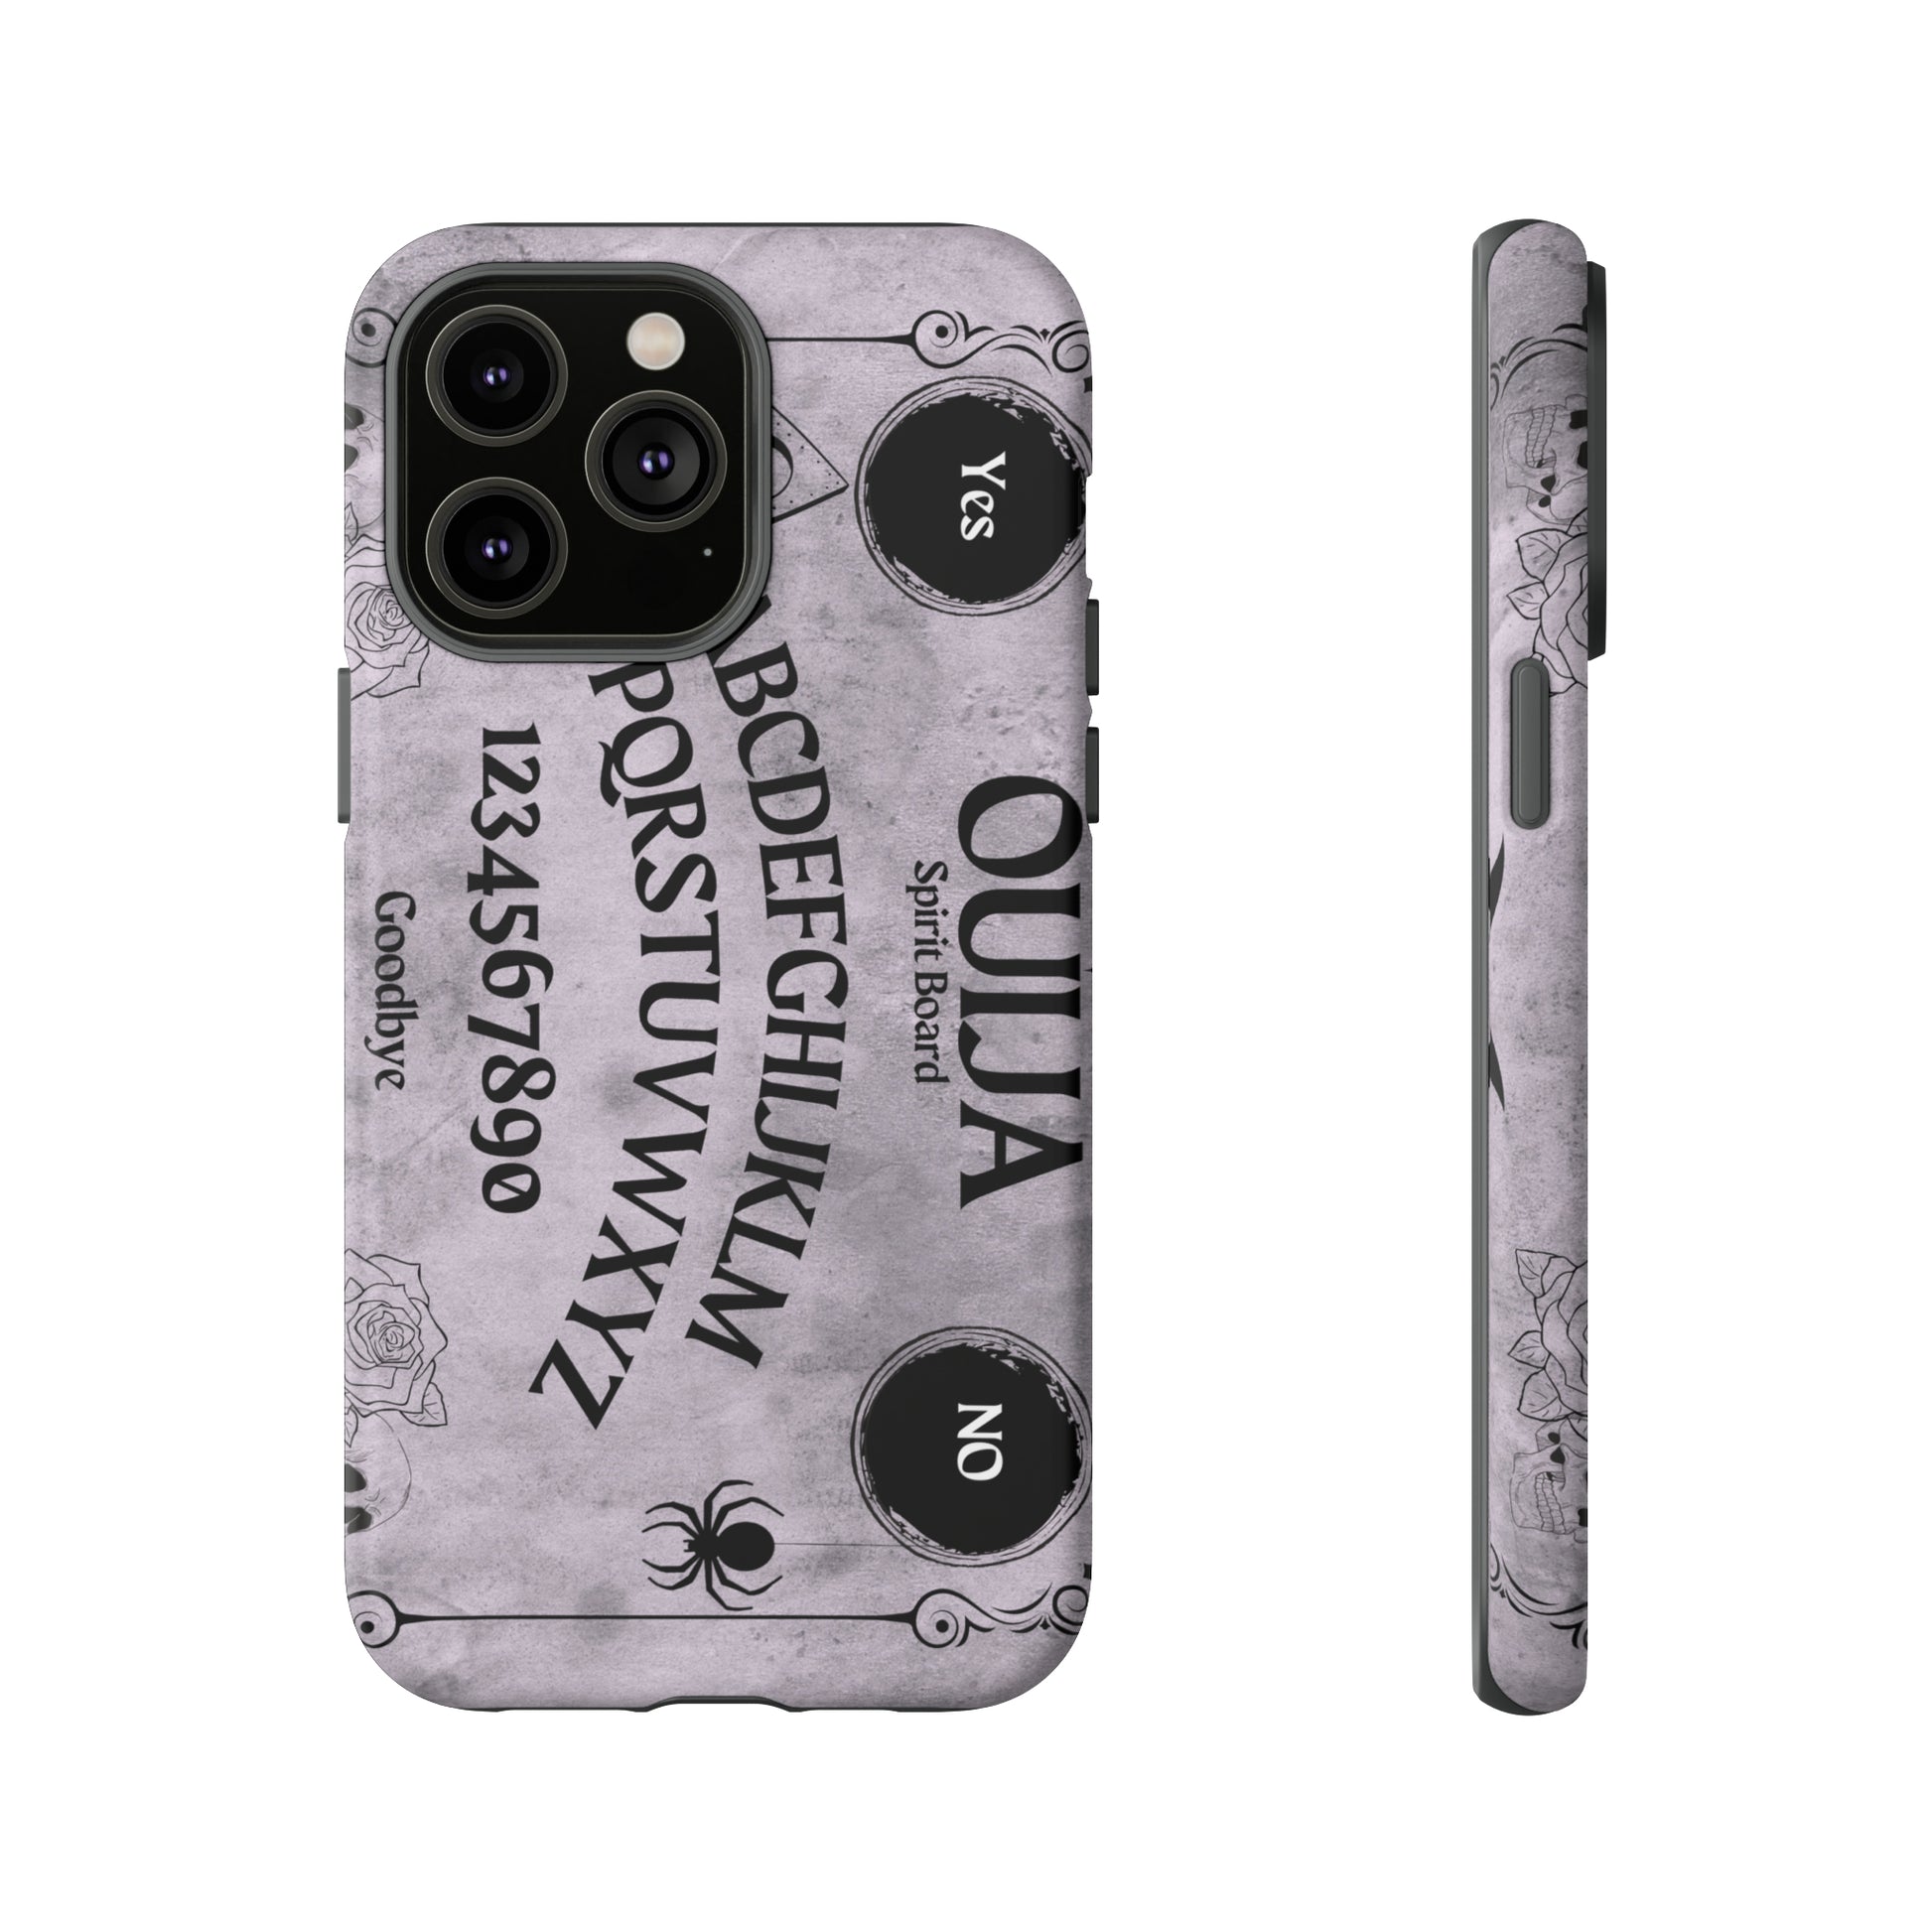 Ouija Board Tough Phone Cases For Samsung iPhone GooglePhone CaseVTZdesignsiPhone 14 Pro MaxMatteAccessoriesGlossyhalloween